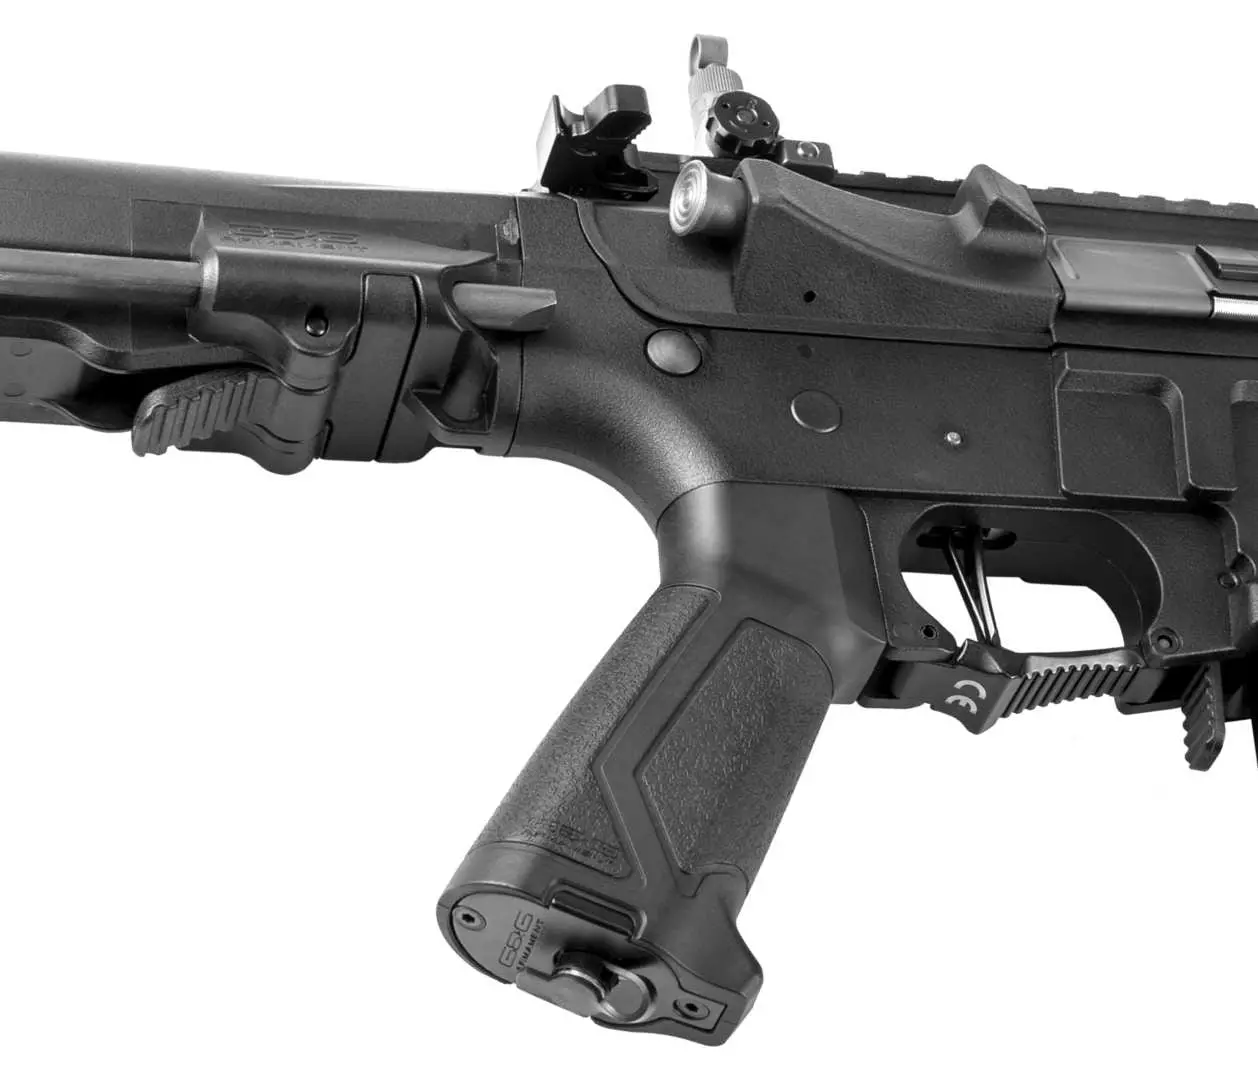 ARP9 lasertag smg pistol grip2